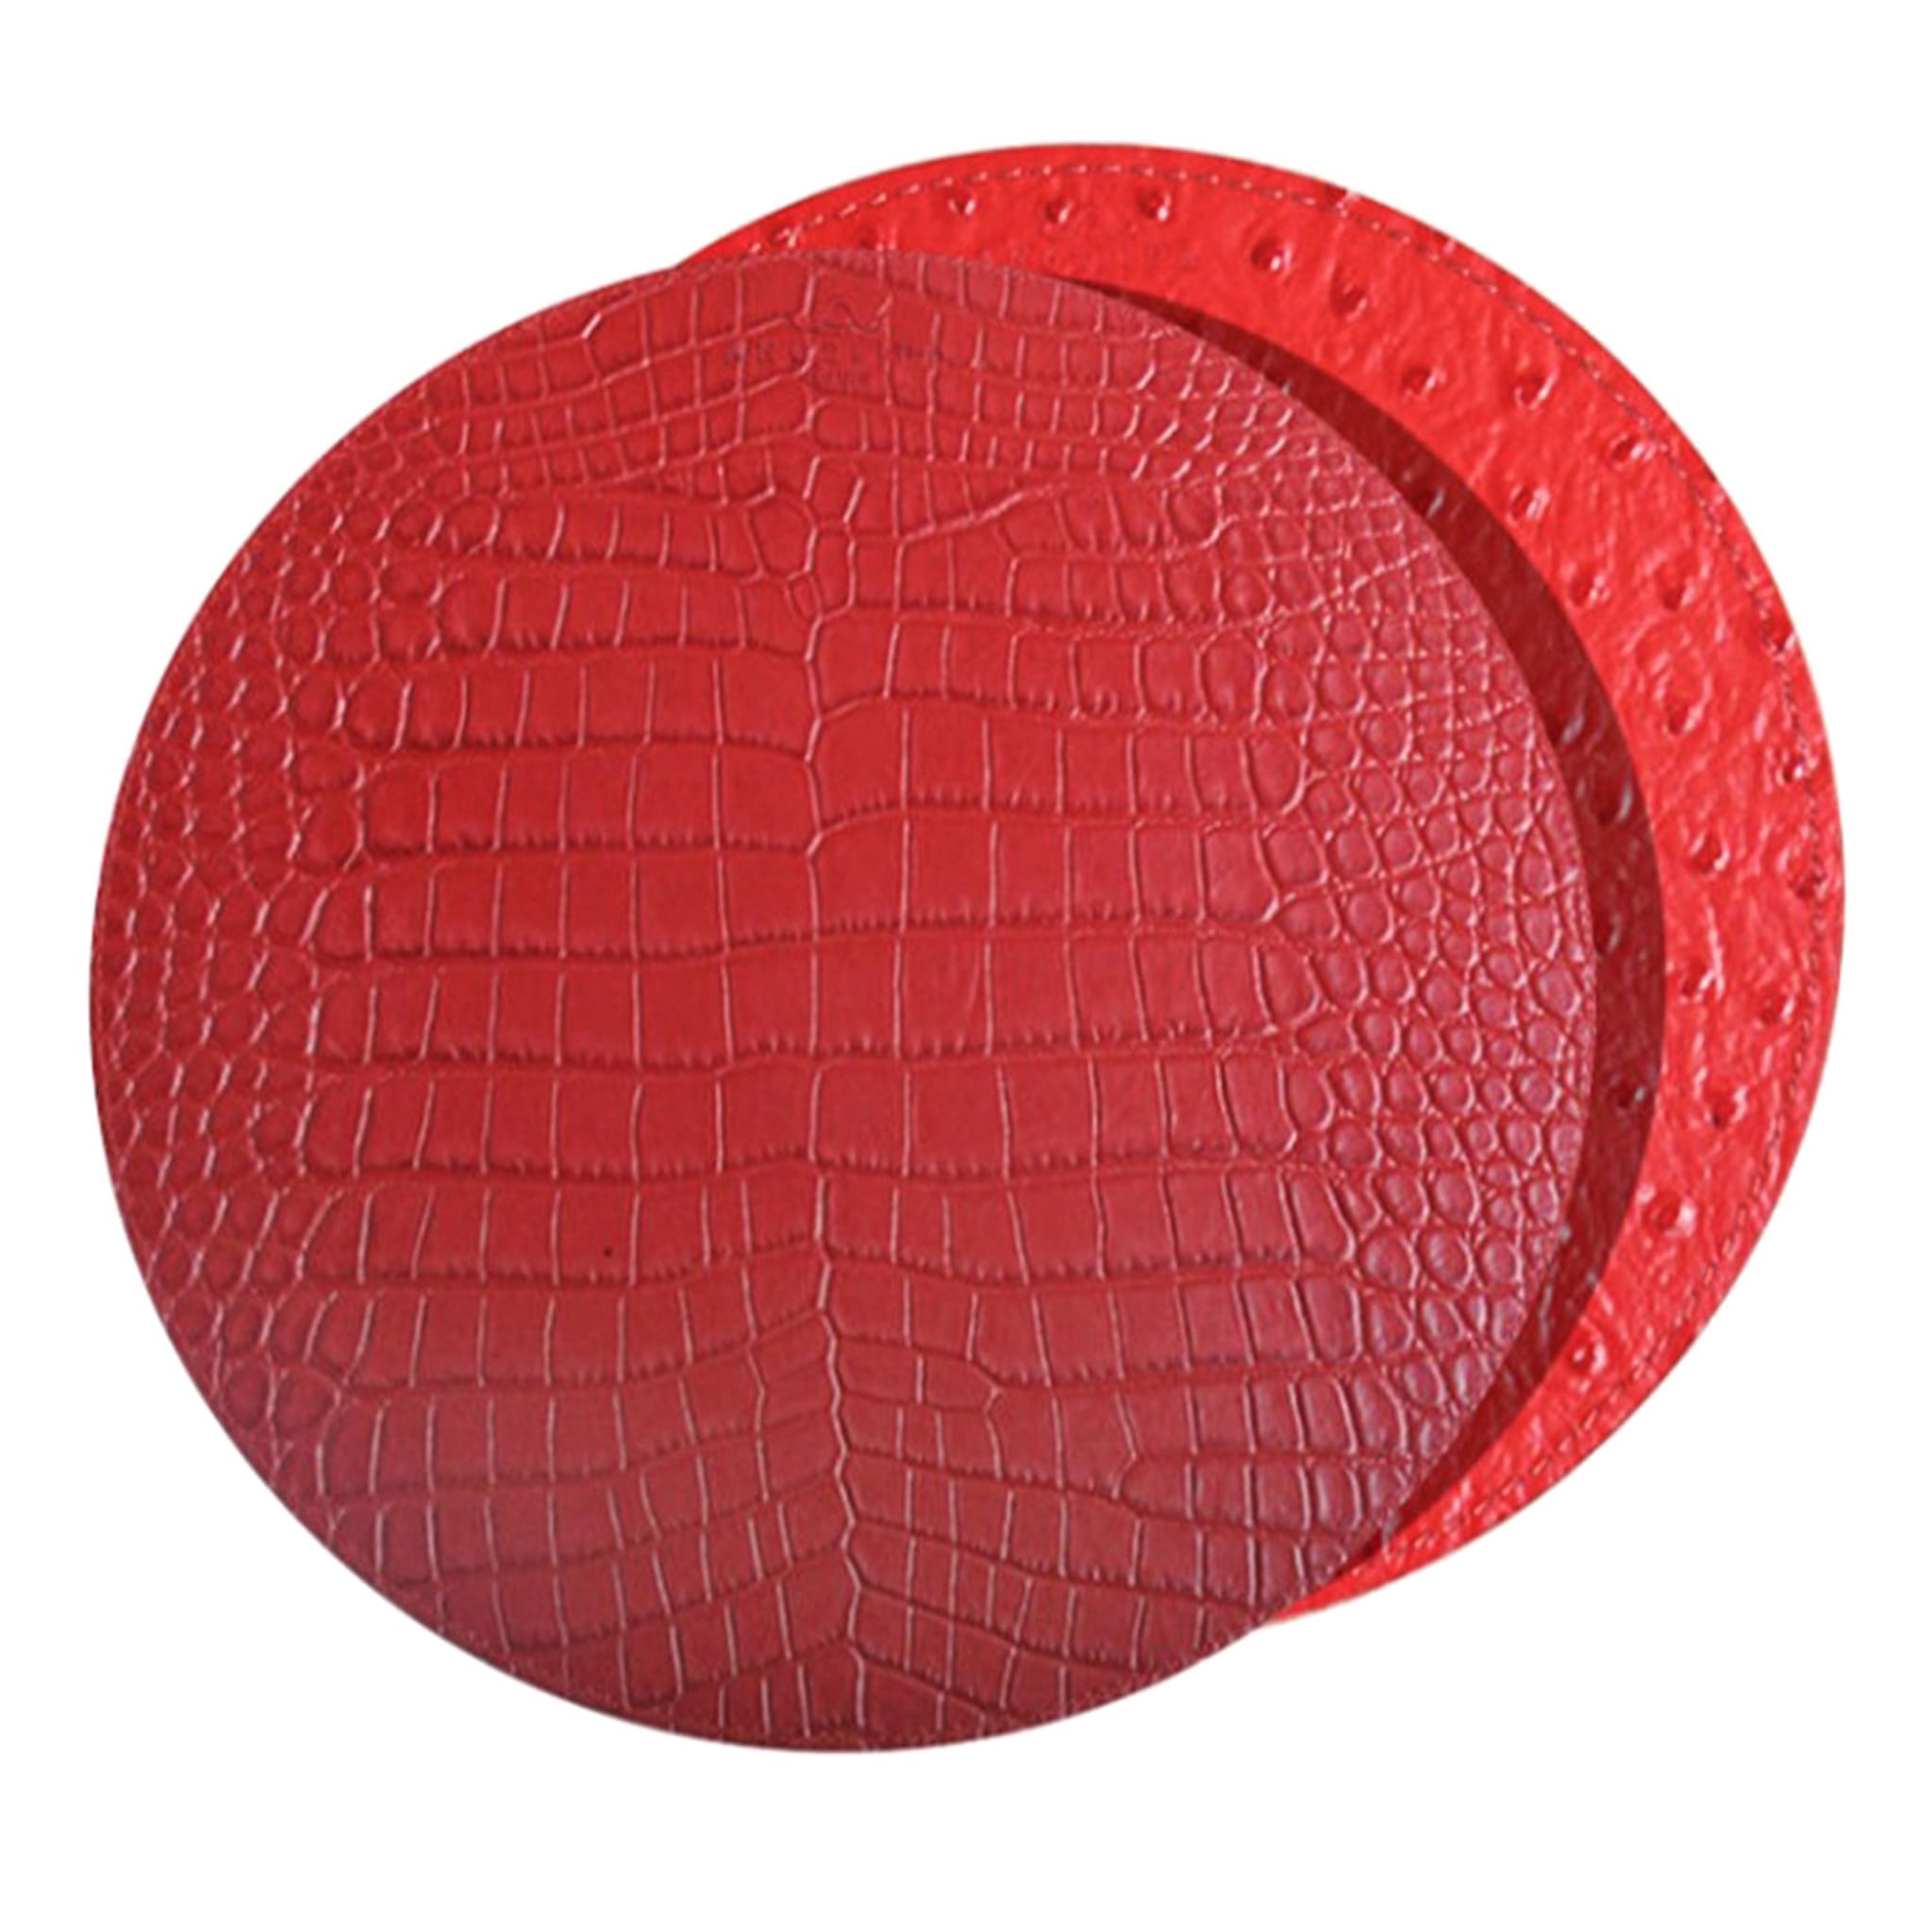 Kenia Medium 2er-Set runde Platzsets aus rotem Leder - Hauptansicht